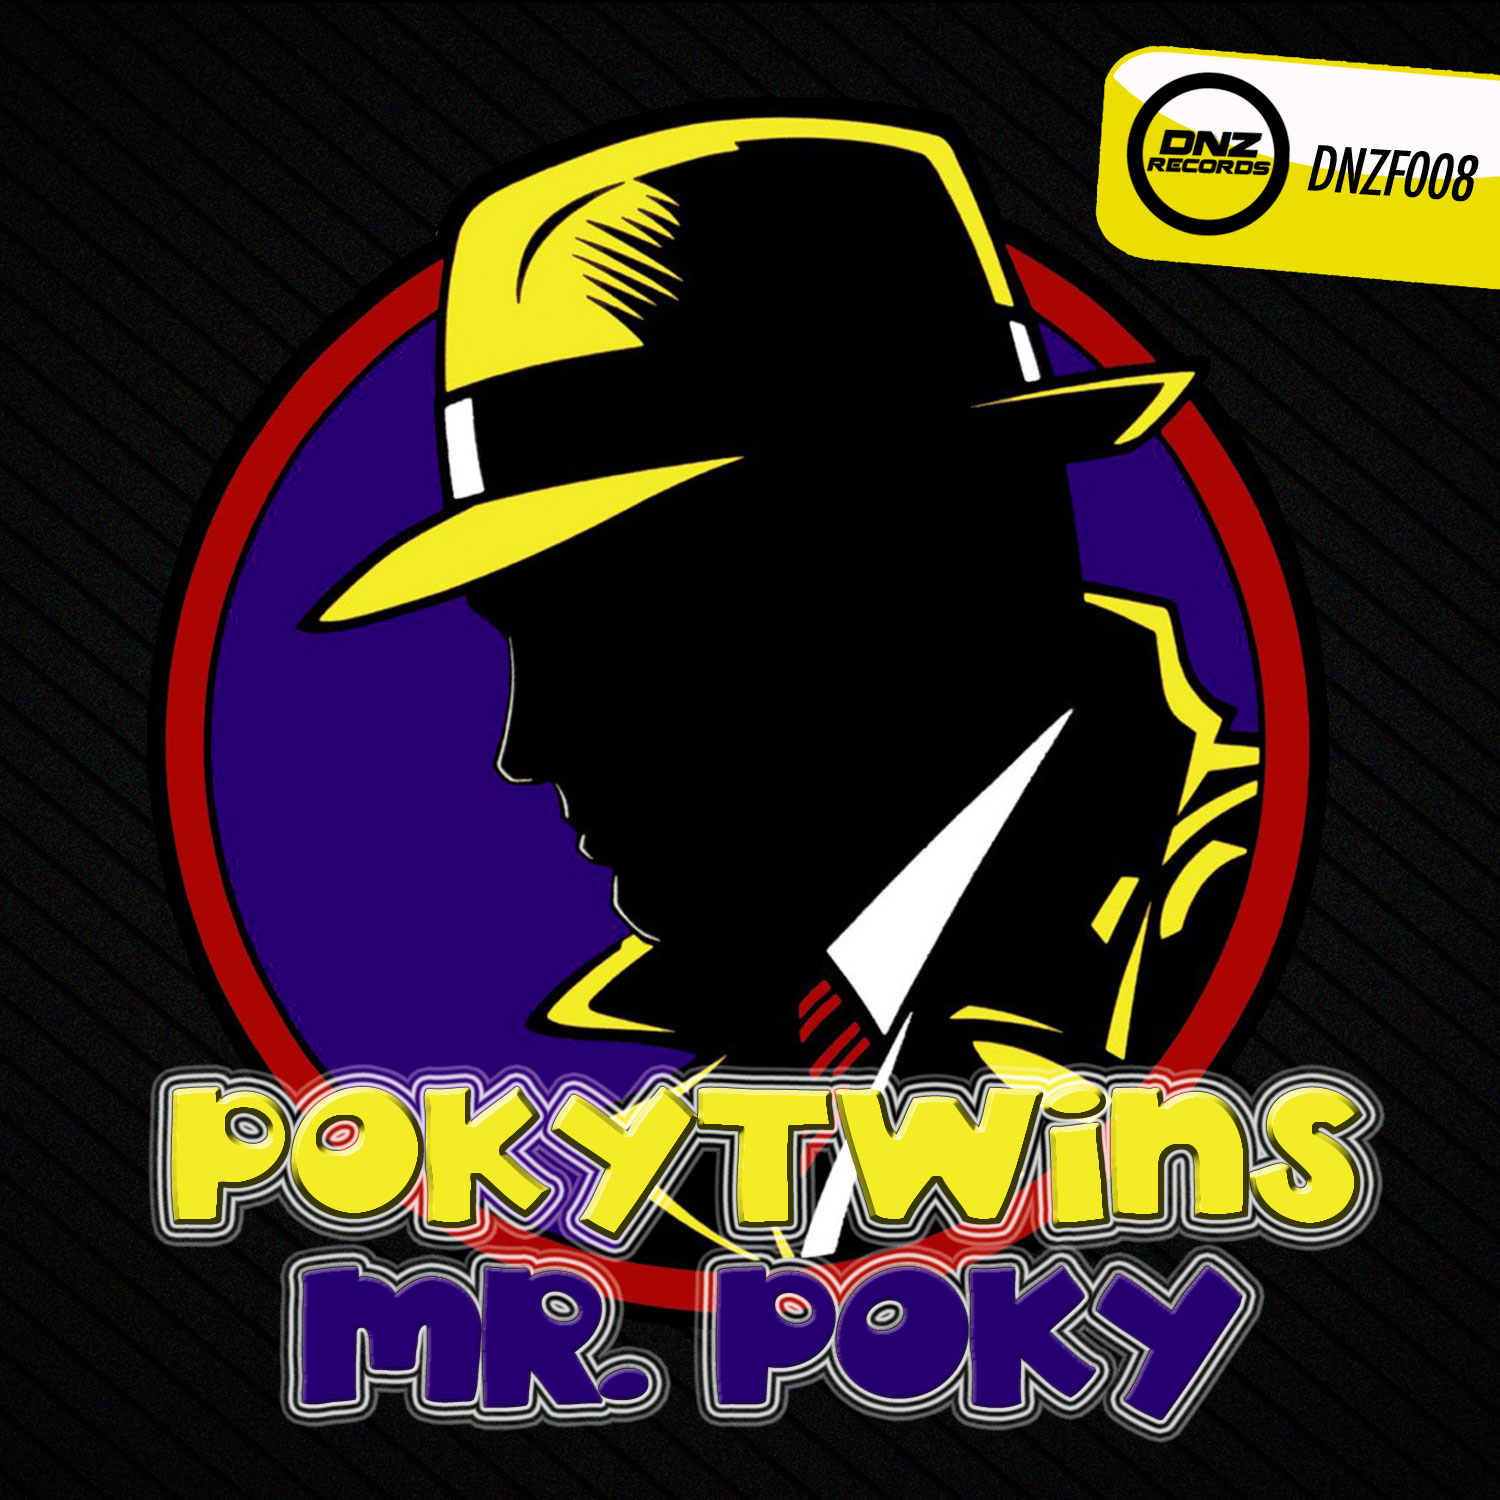 [DNZF008] PokyTwins - Mr Poky Artworks-000036728181-bj9skd-original